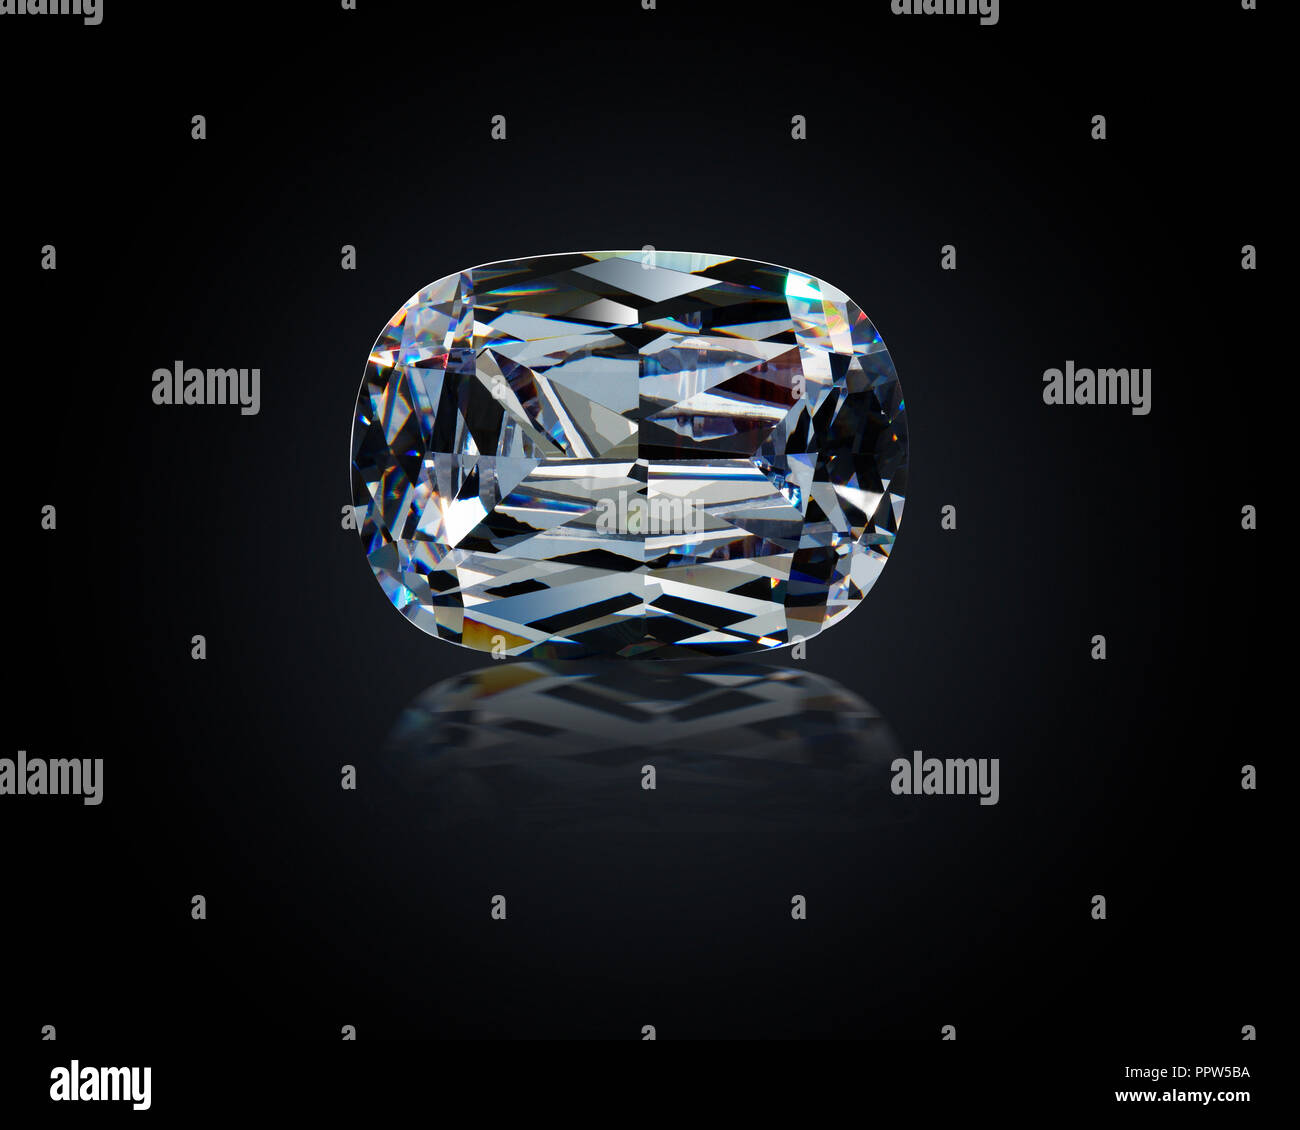 Oval Cut Diamond Gemstone Gem Stock Photo